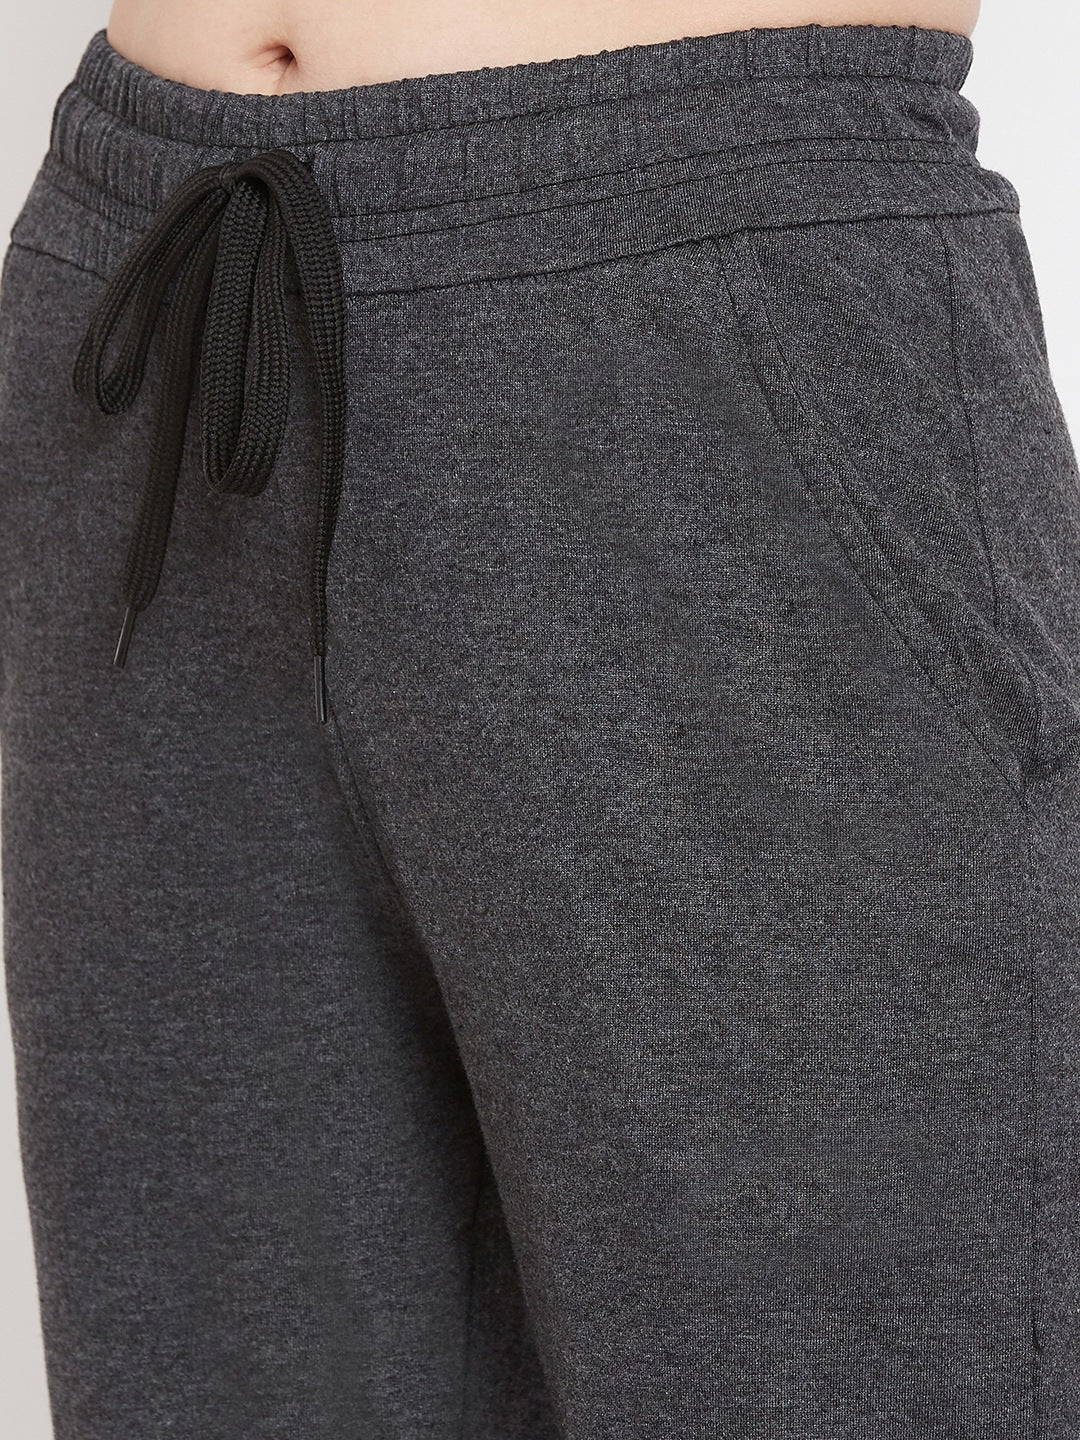 Women's Pack of 2 Track Pants- Black and  Dark Grey